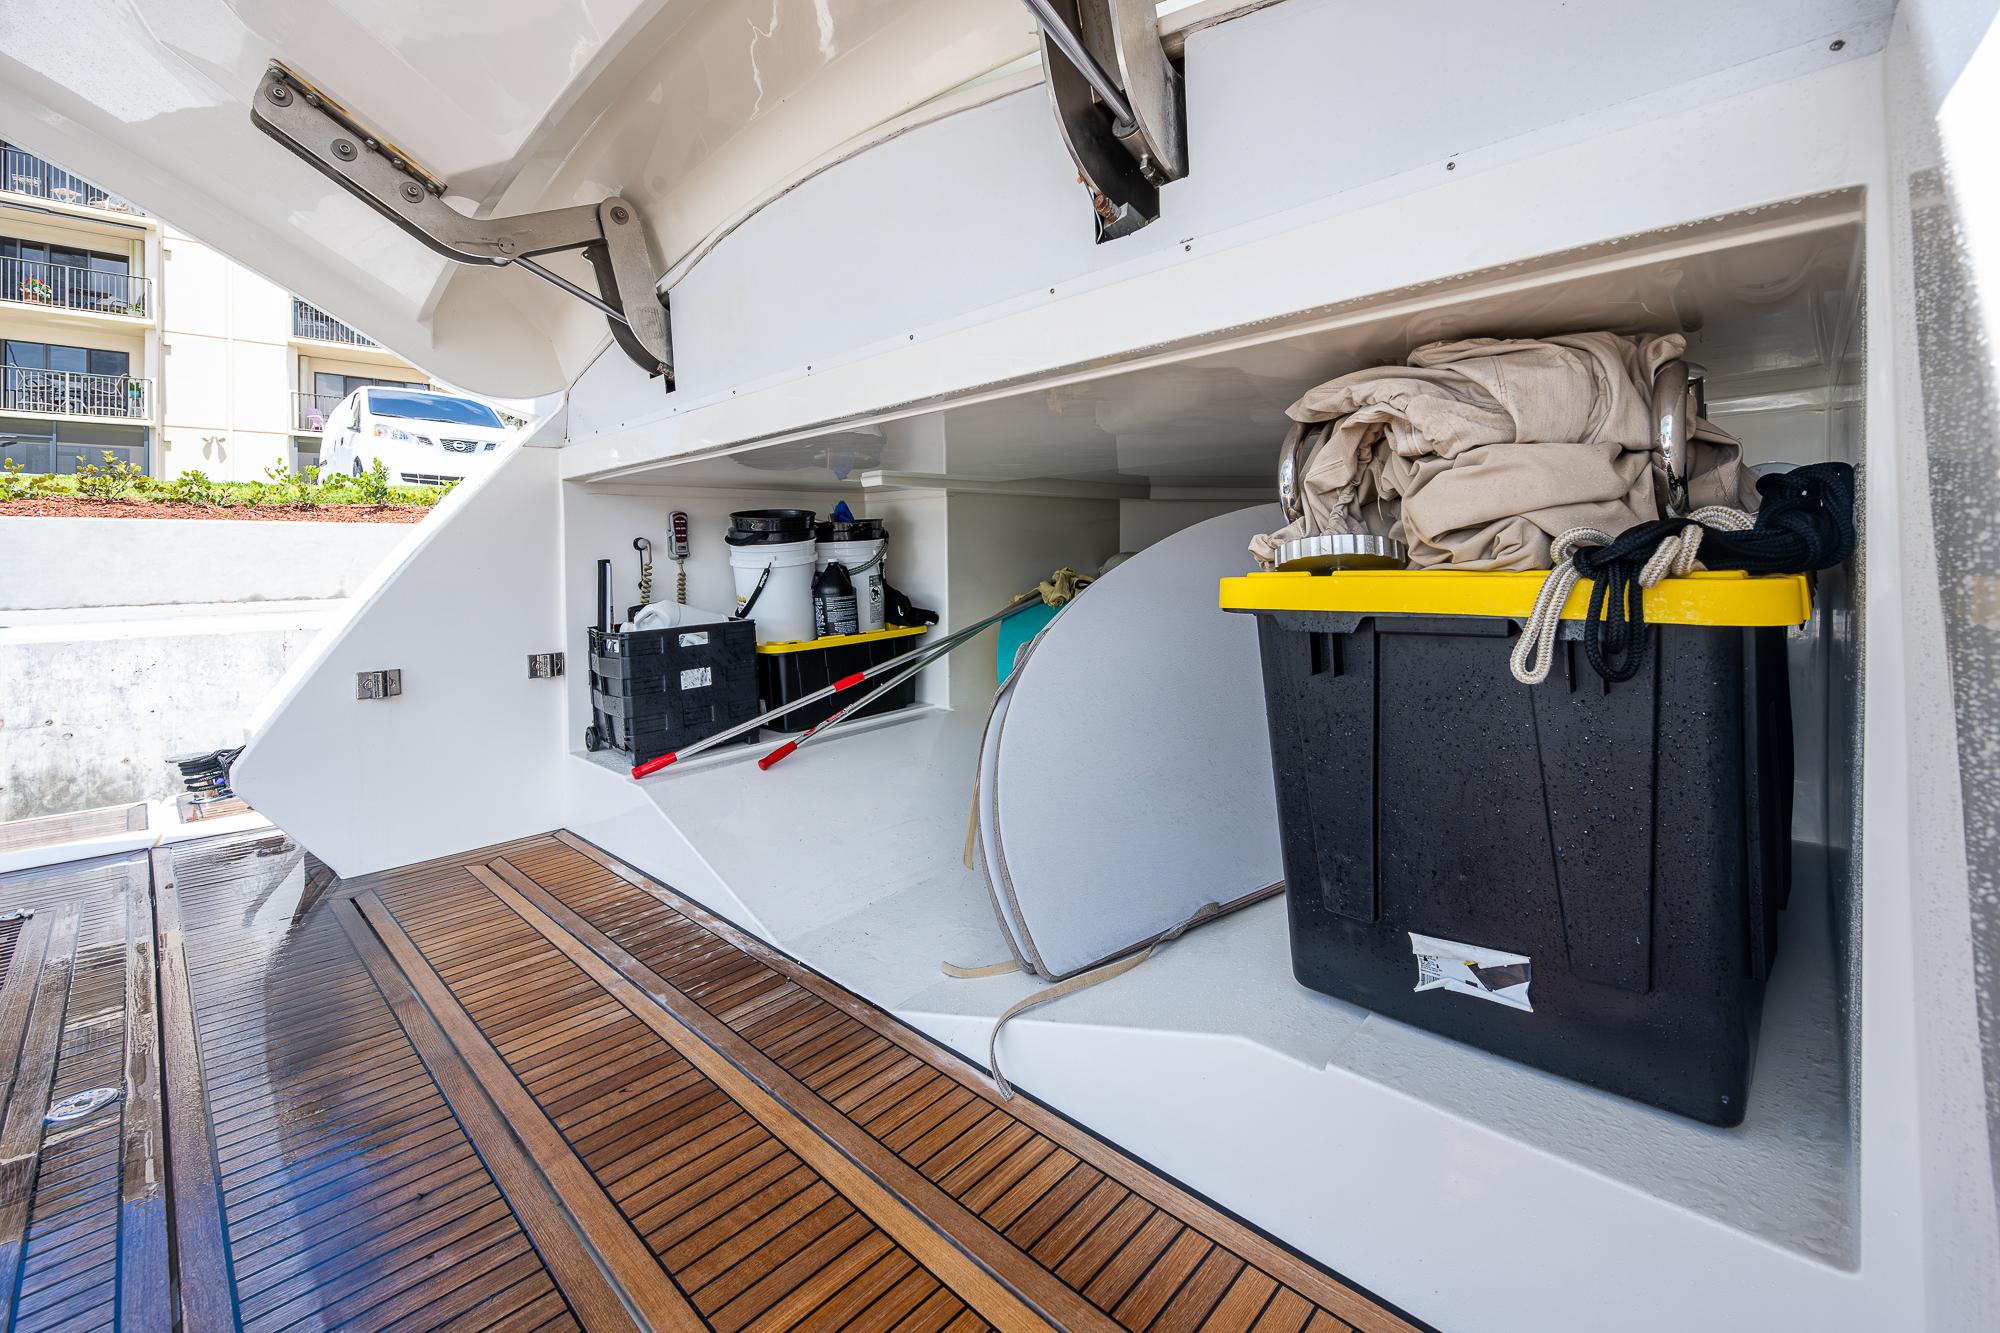 2017 Monte Carlo Yachts 80 Flybridge